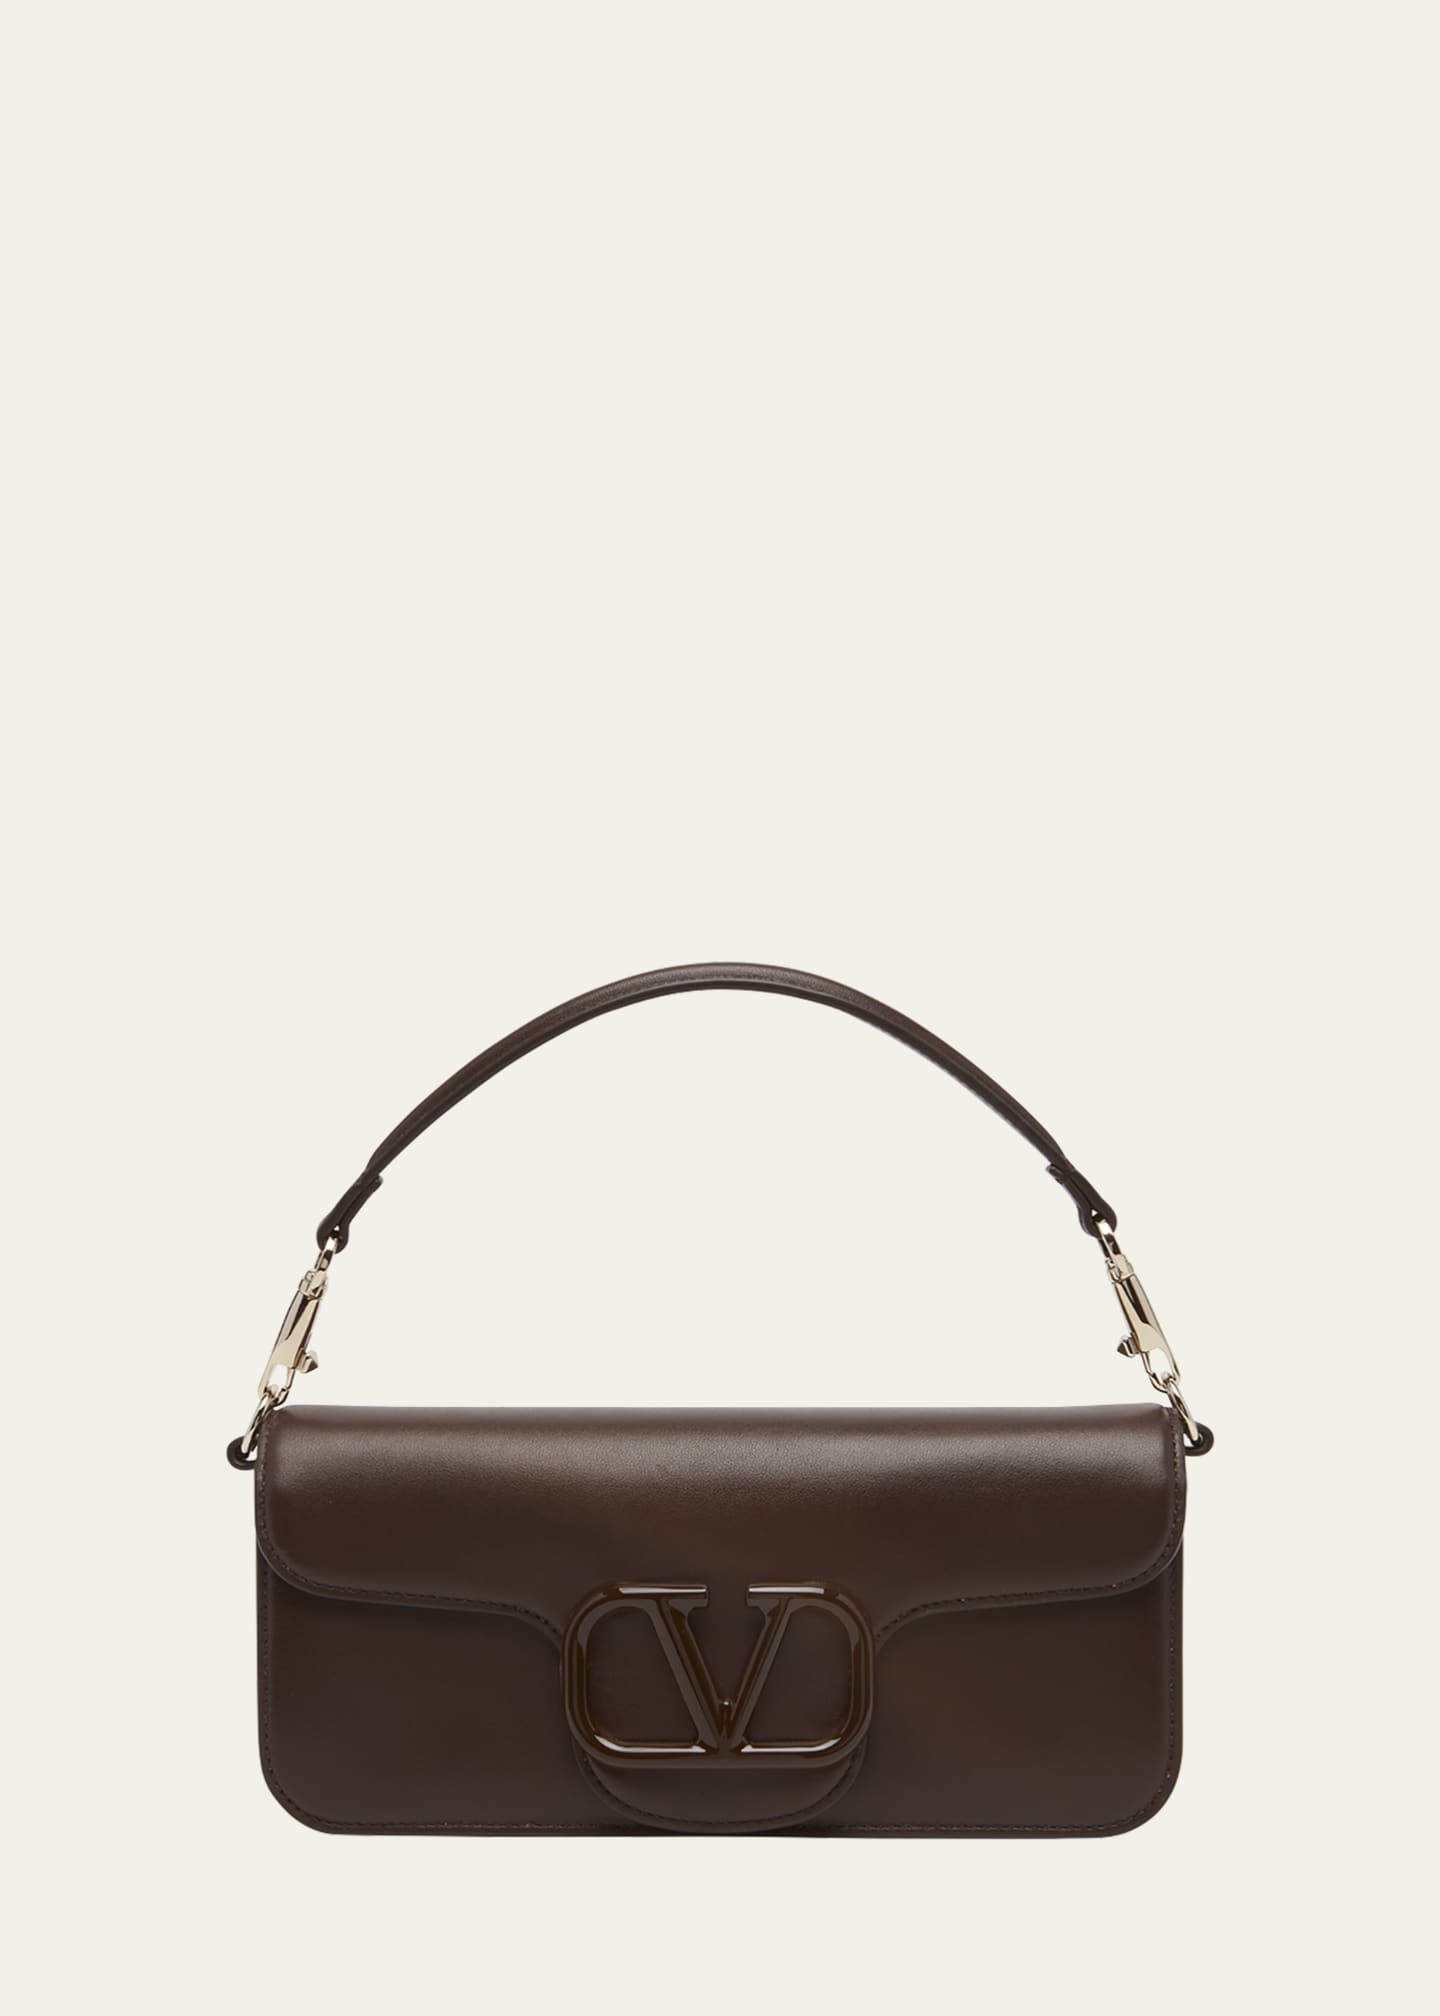 Valentino, Bags, Valentino Vlogo Grainy Leather Shoulder Bag